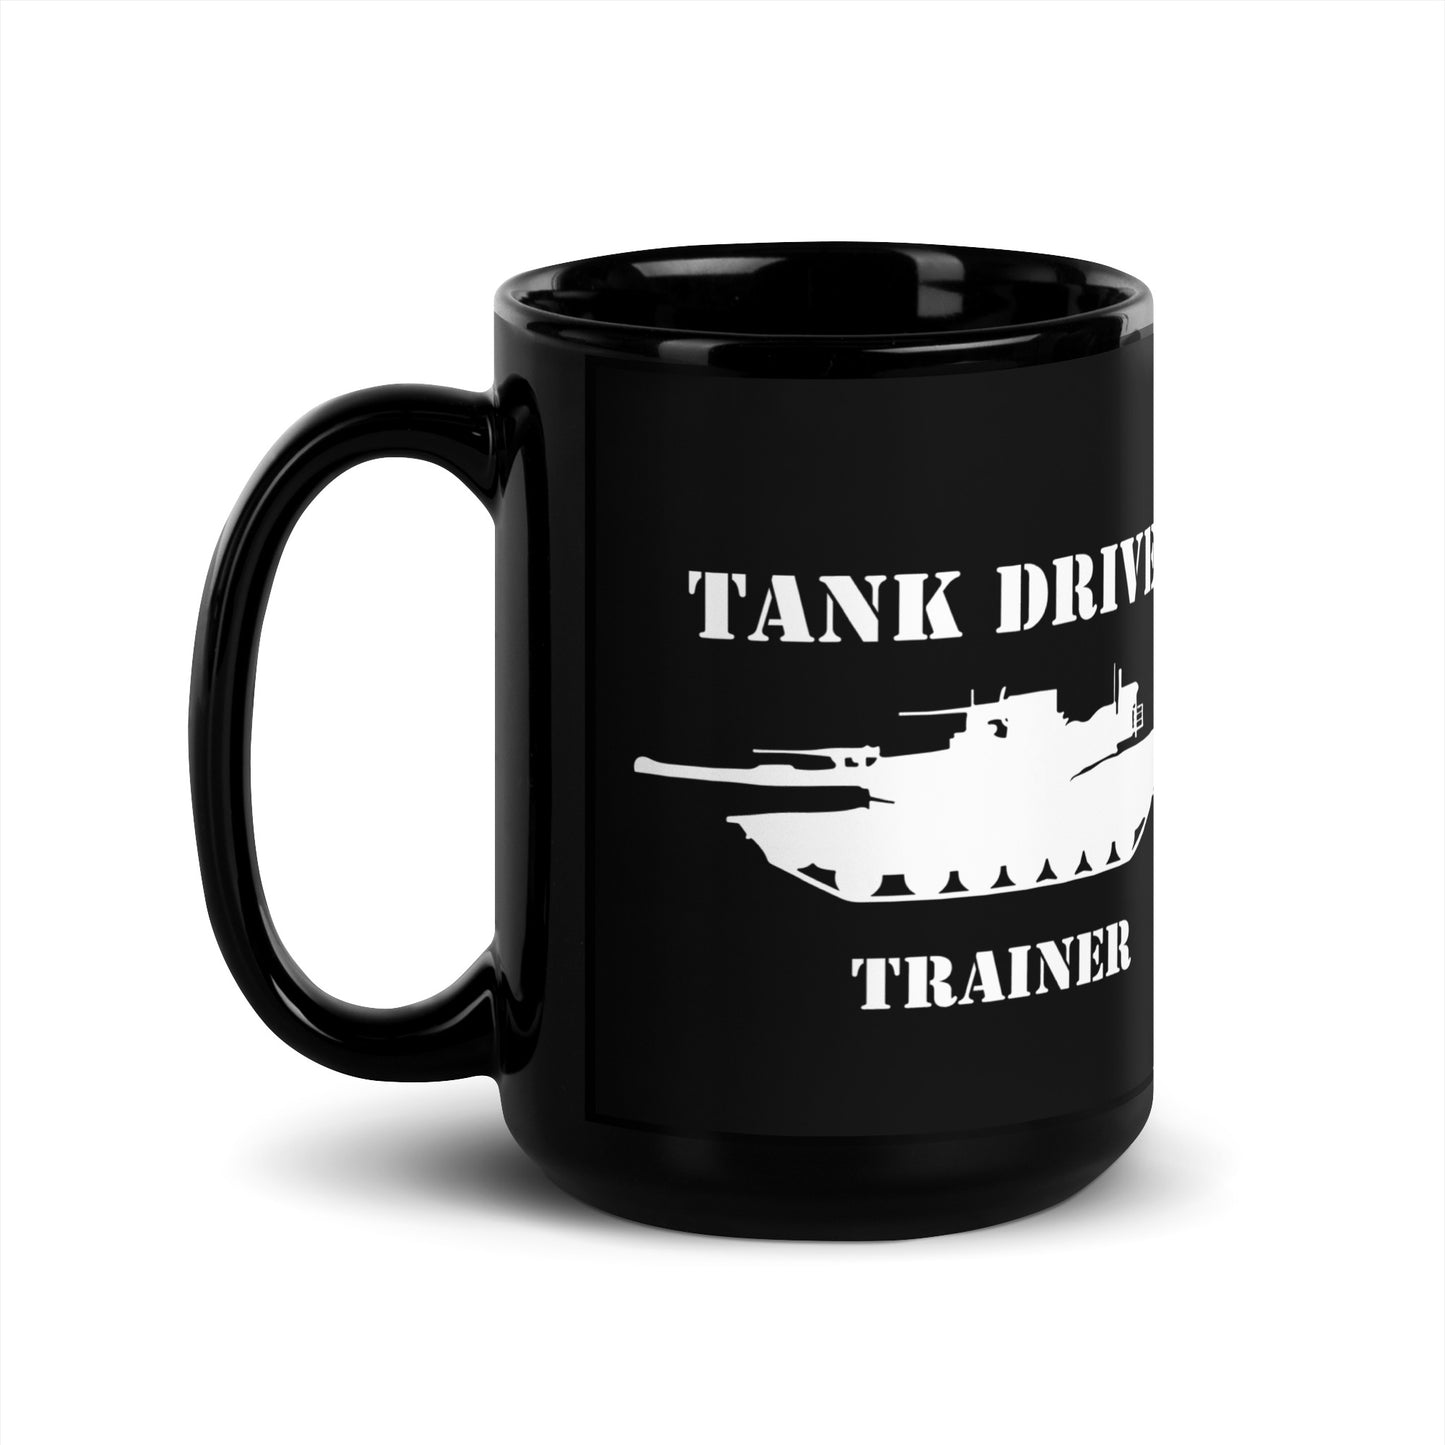 Tank Driver Trainer Ceramic Mug - ZSDdc3